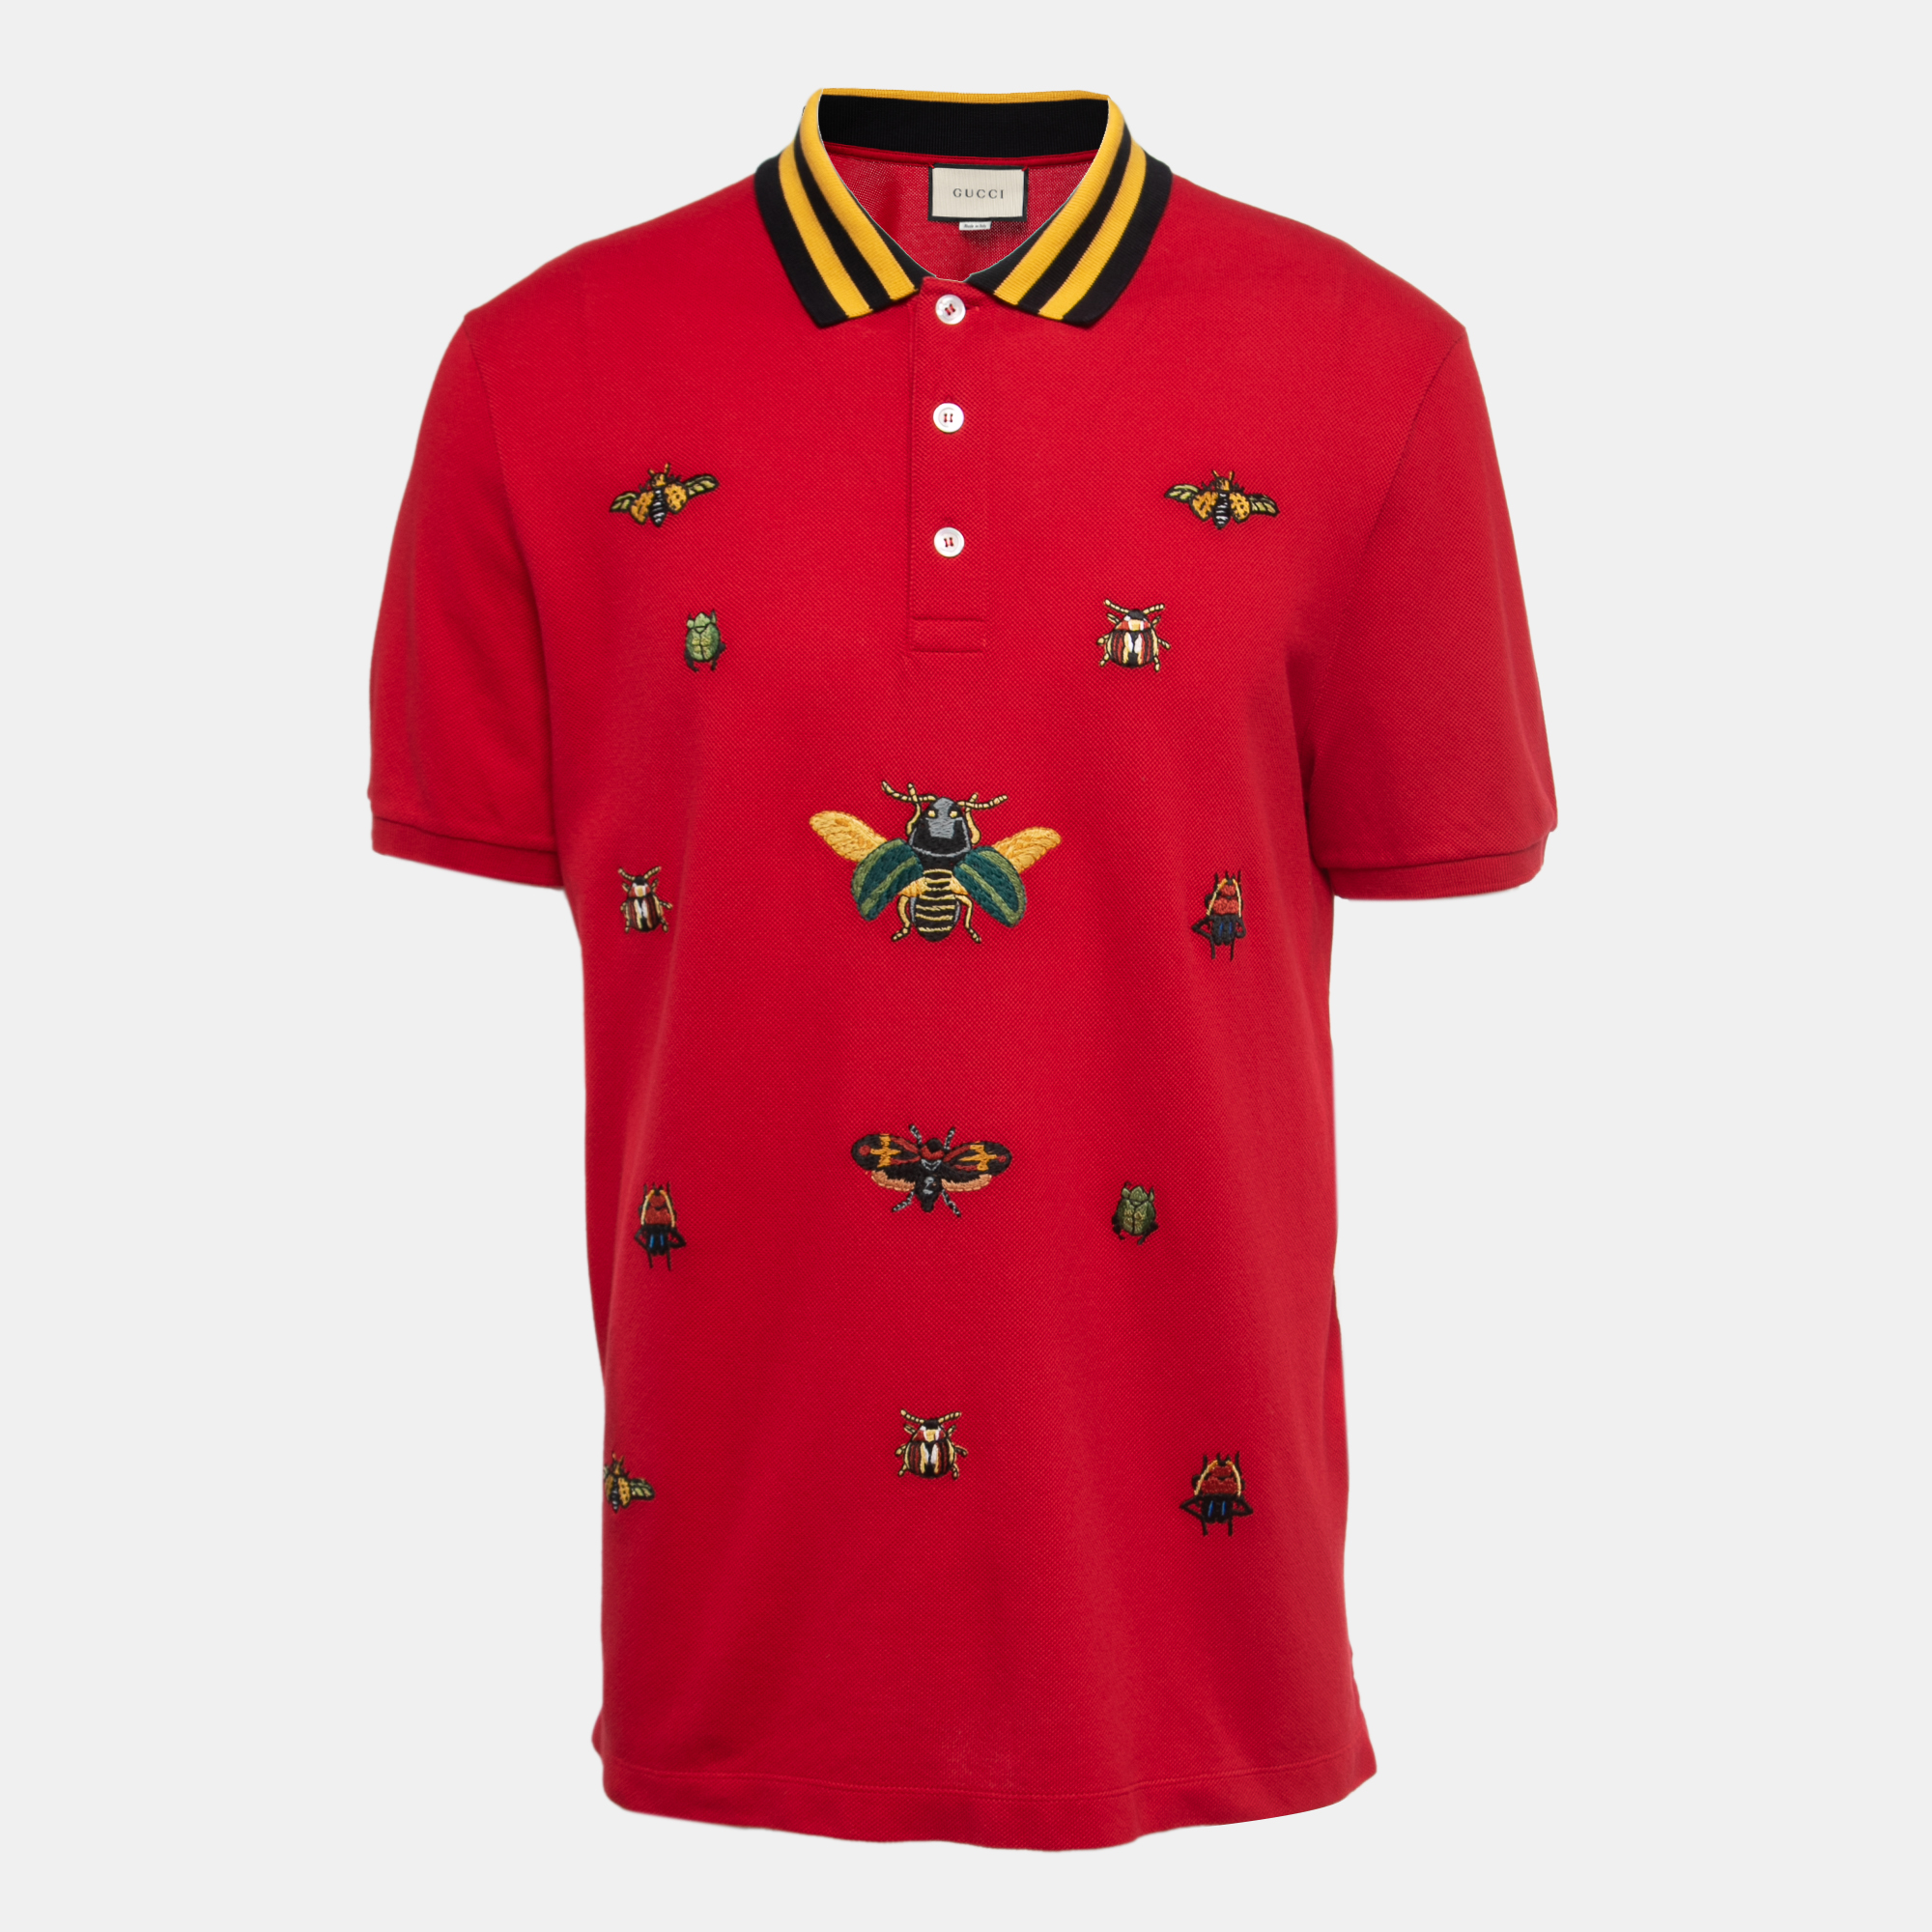 Gucci - Cotton-piqué Shirt Red - M